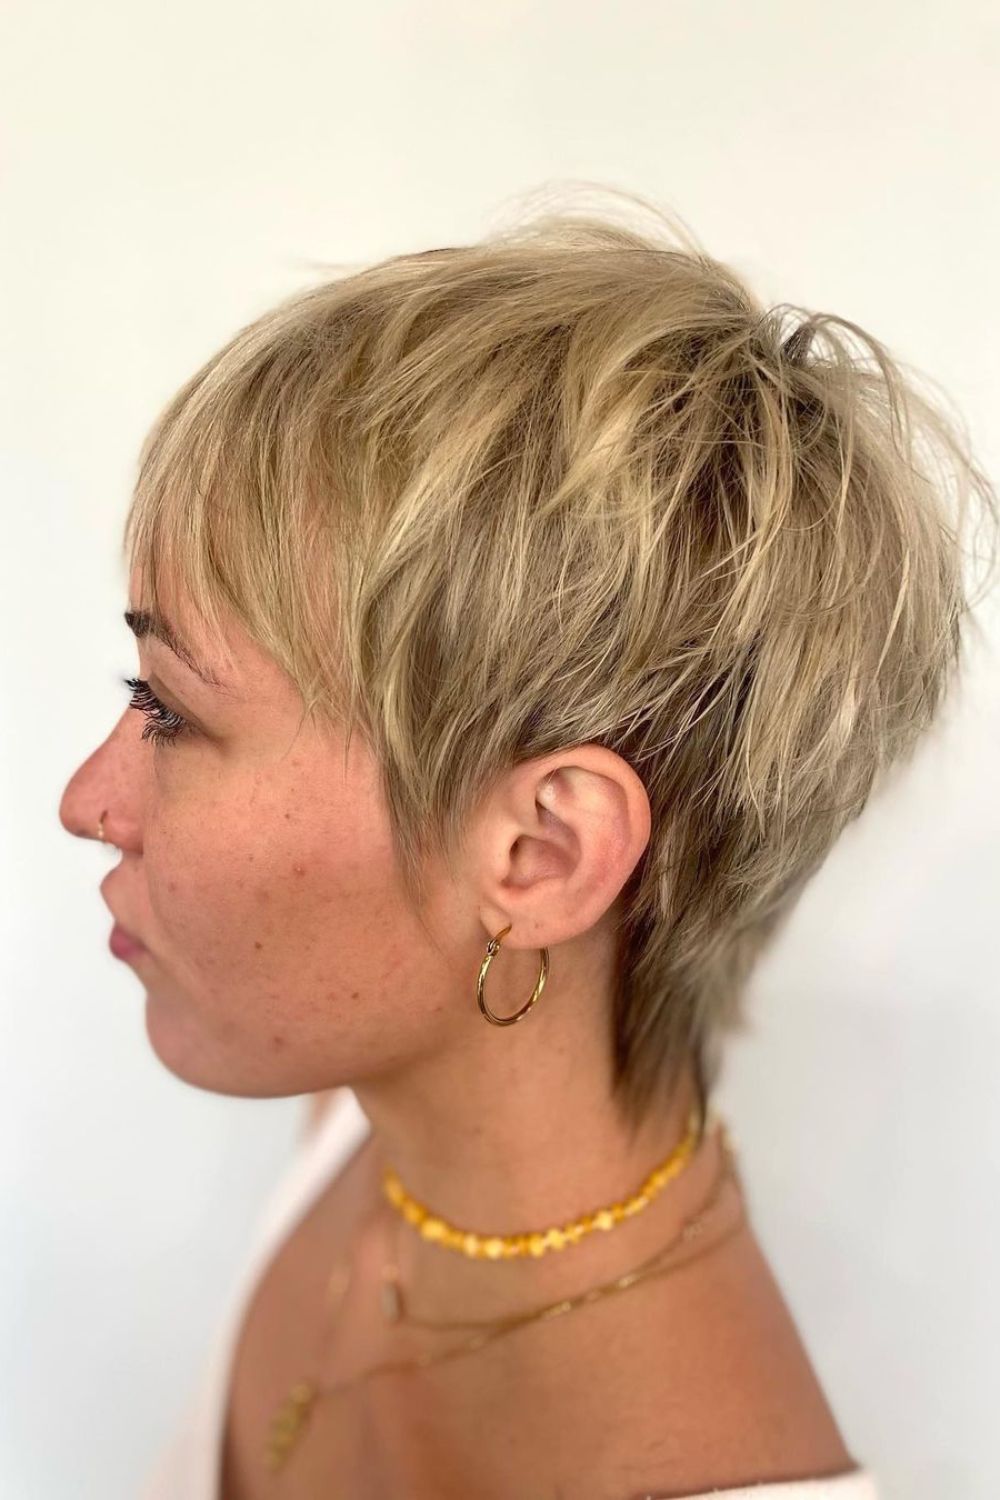 A woman with a blonde choppy textured pixie cut.